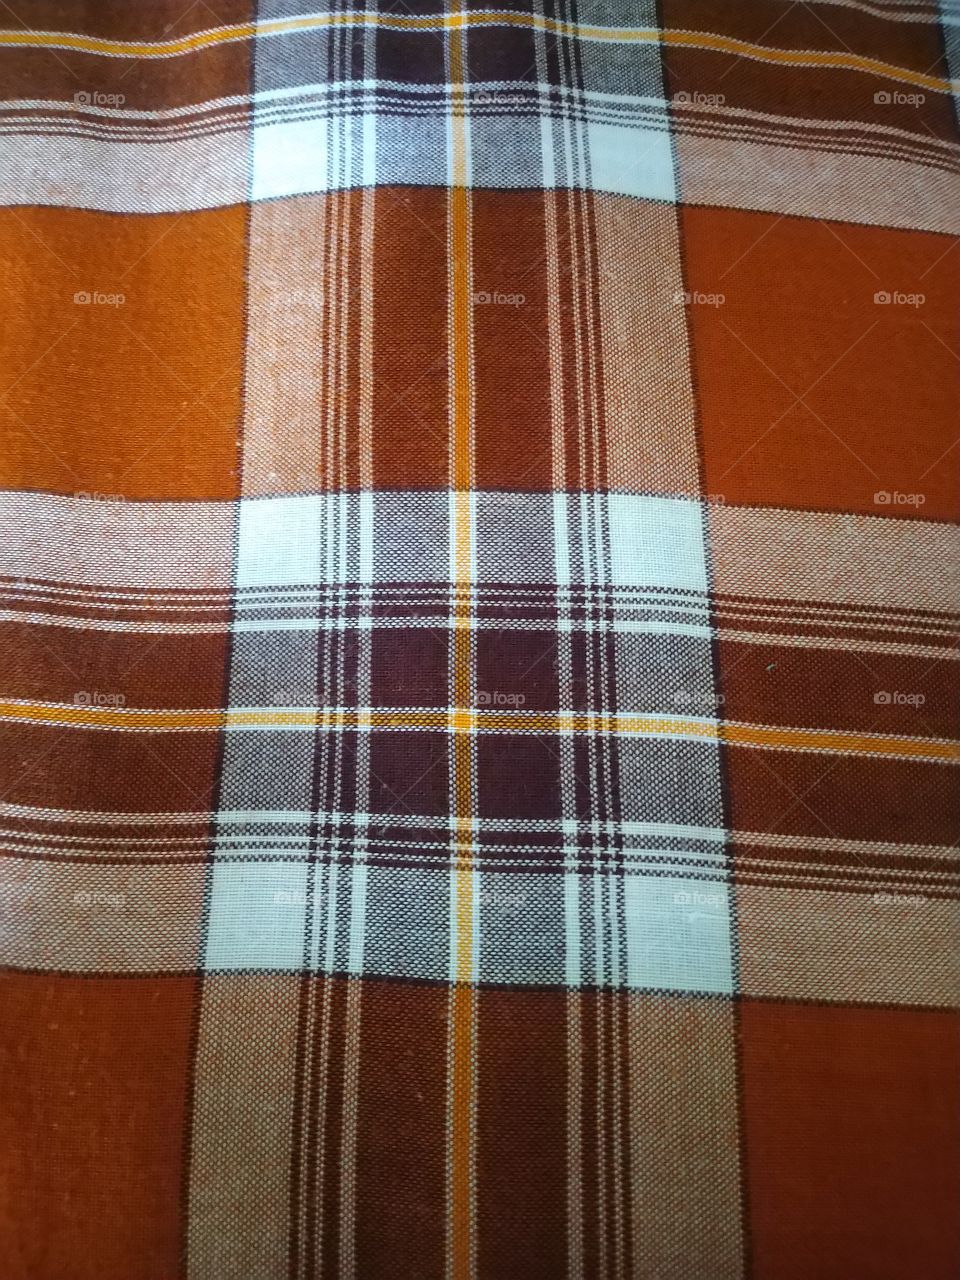 pattern
brown
cloth
soft